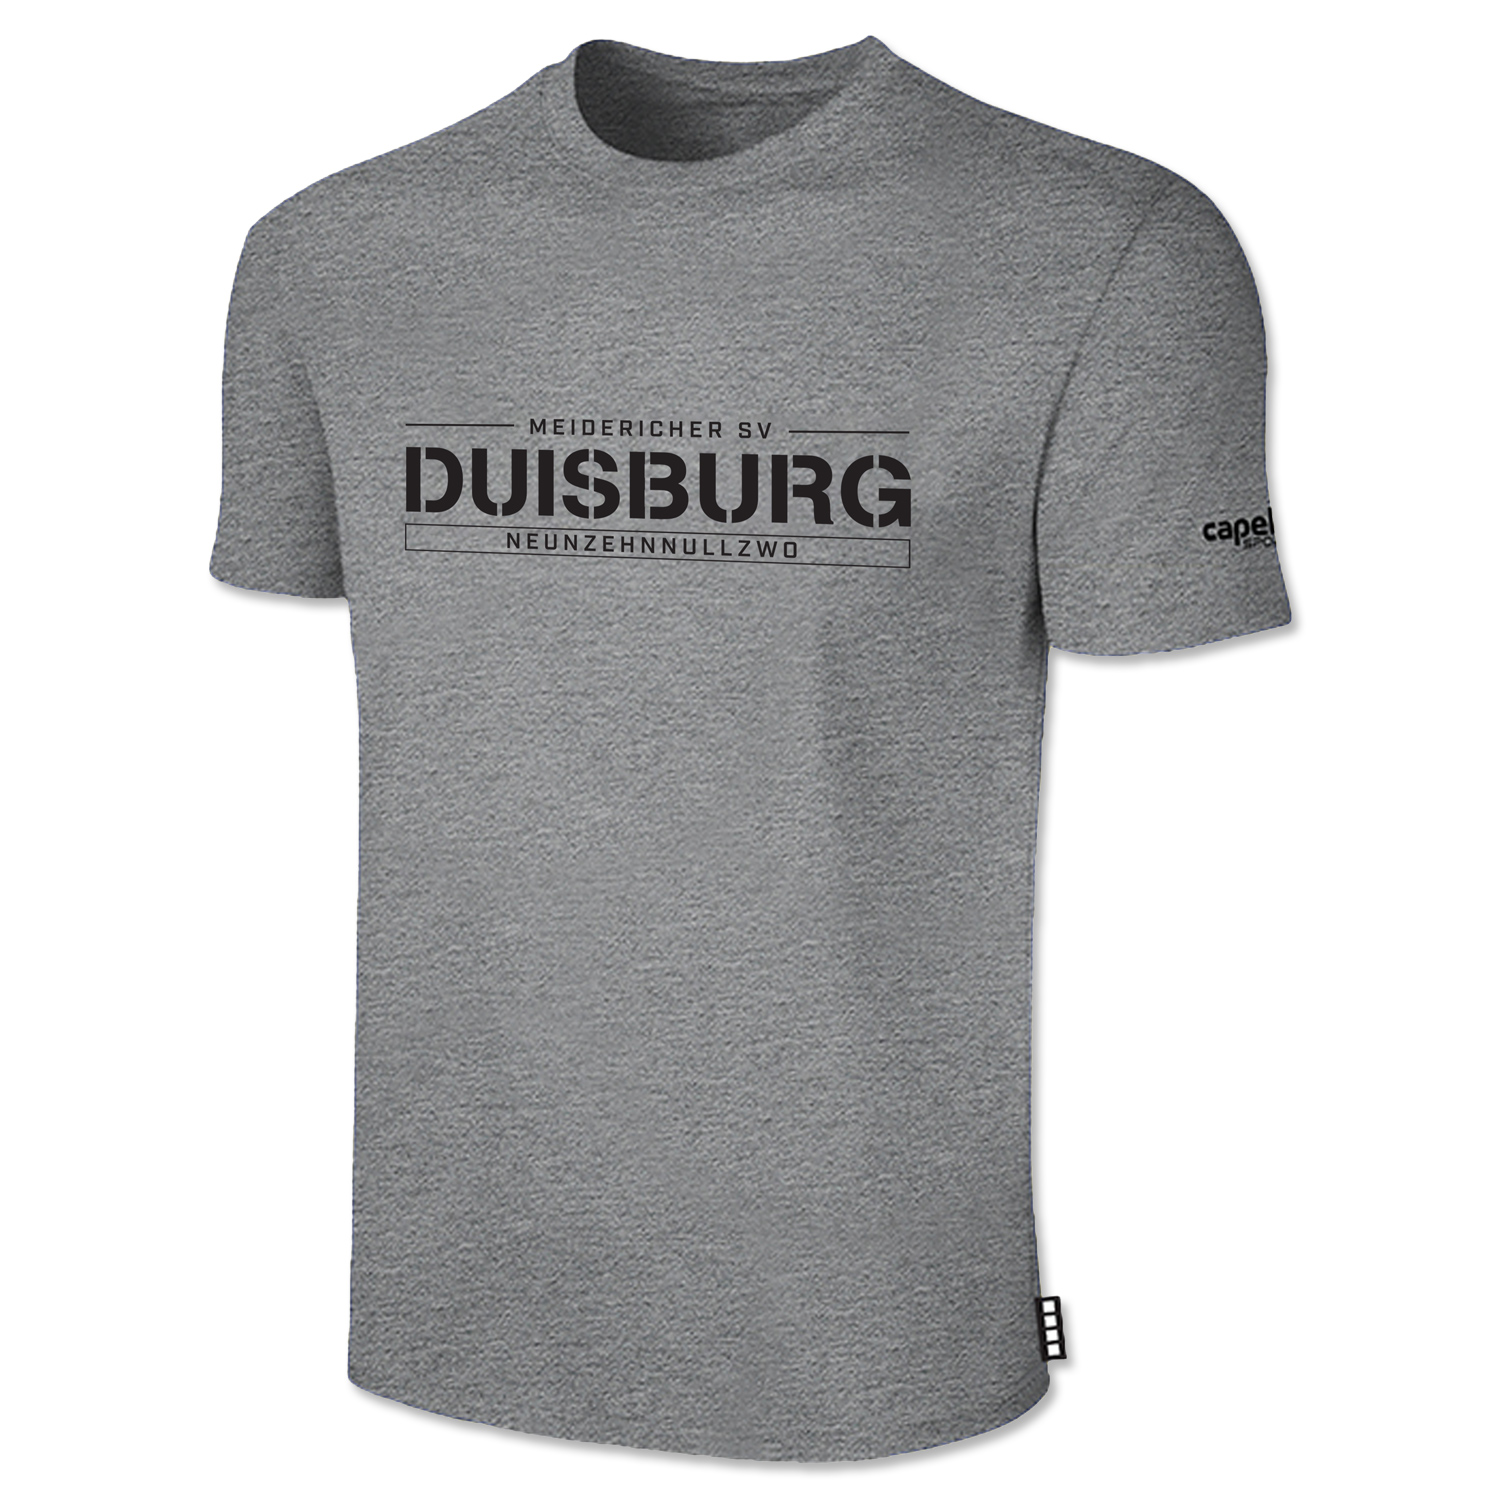 T-Shirt "DUISBURG" gry